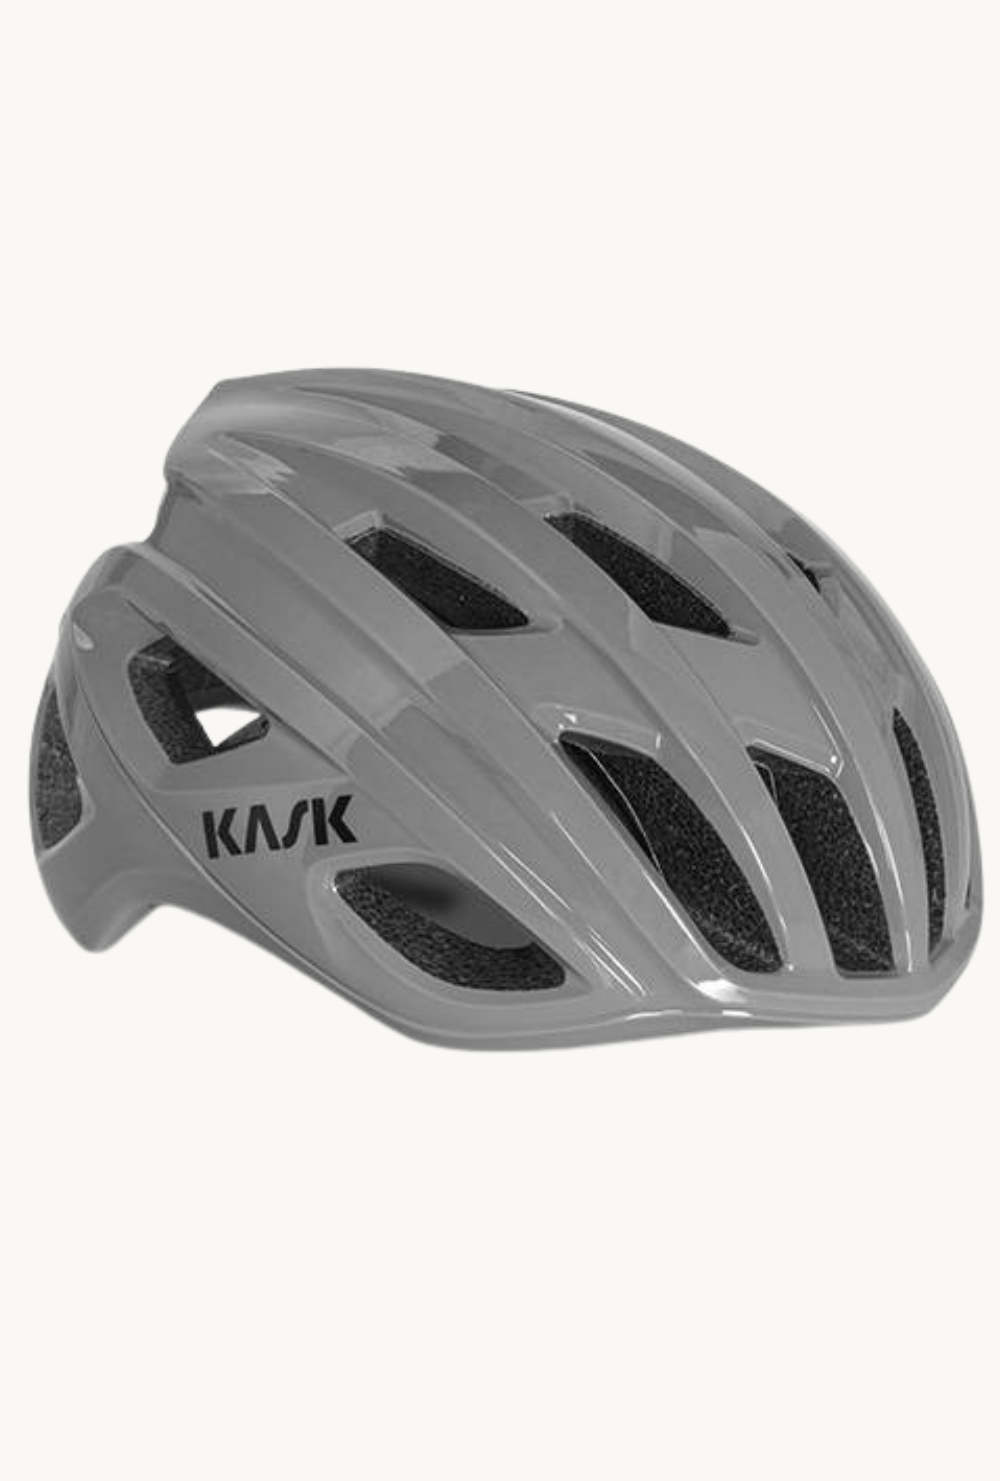 Helmet - Kask Mojito Greysmall / Grey